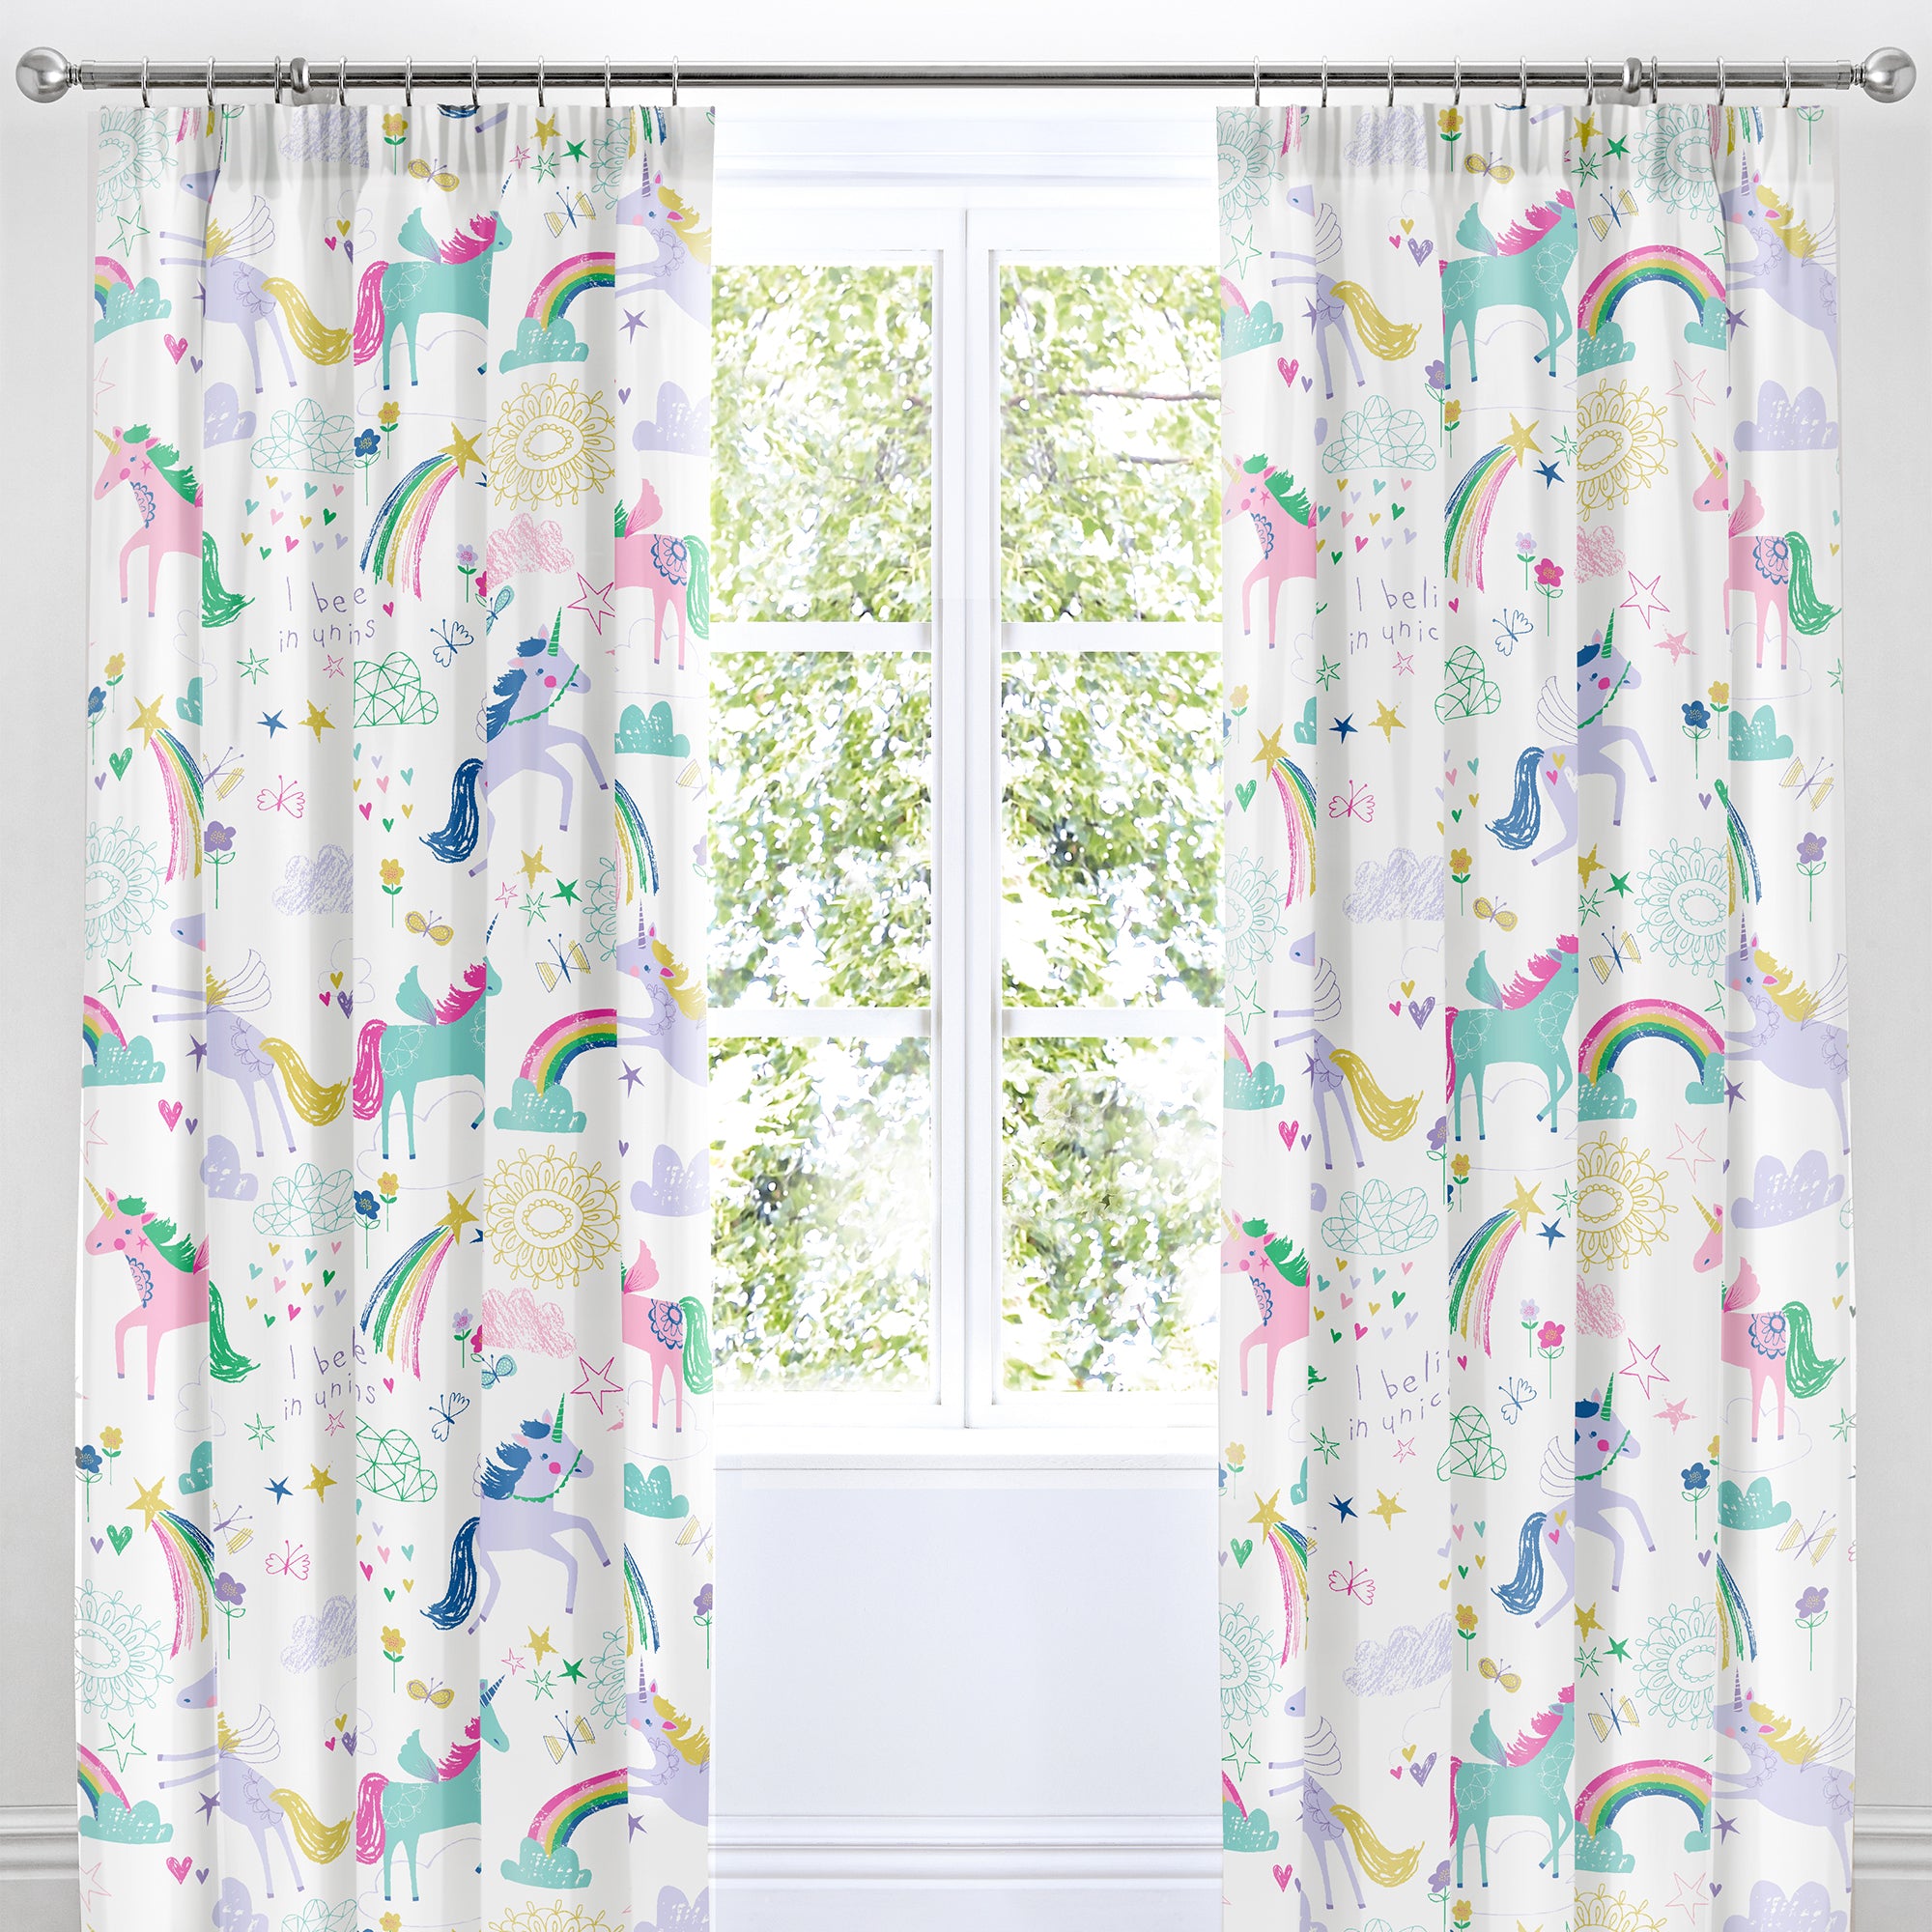 Bedlam Rainbow Unicorn Curtains 66x72 Inch Multi The Original Factory